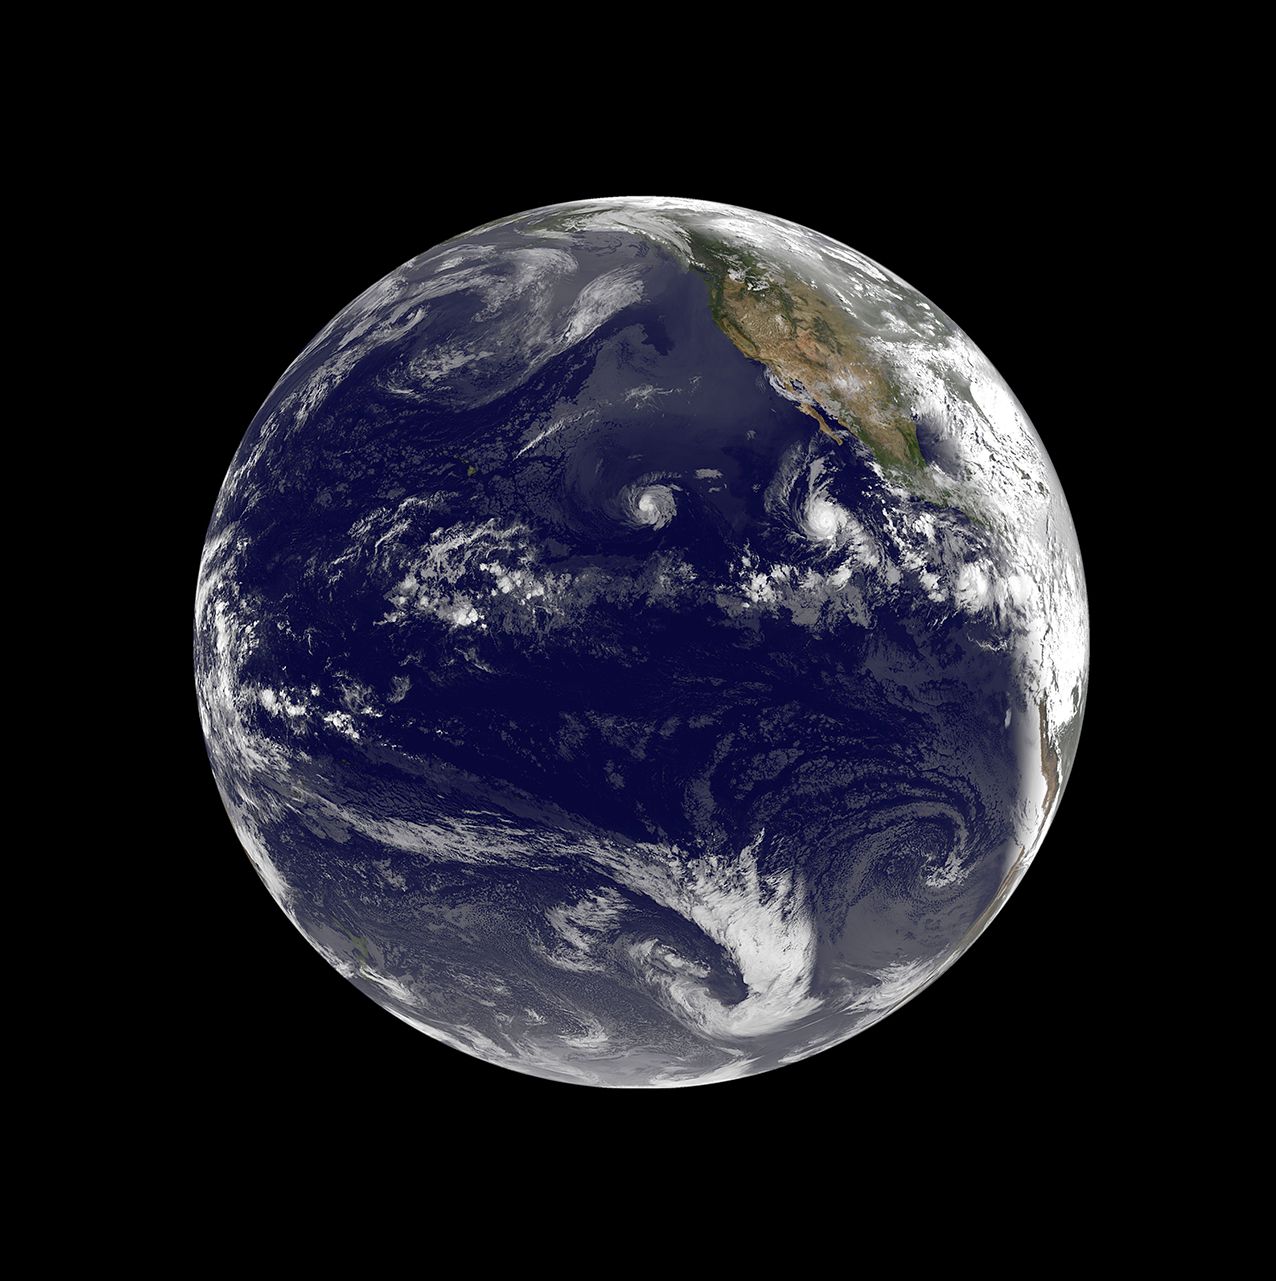 Null 美国国家航空航天局。大尺寸的格式。非凡的地球仪摄影作品，同时展示了对同一天在东太平洋上旋转的三个热带气旋的摄影捕捉。热带风暴 "丹尼尔 "正在接近太平&hellip;